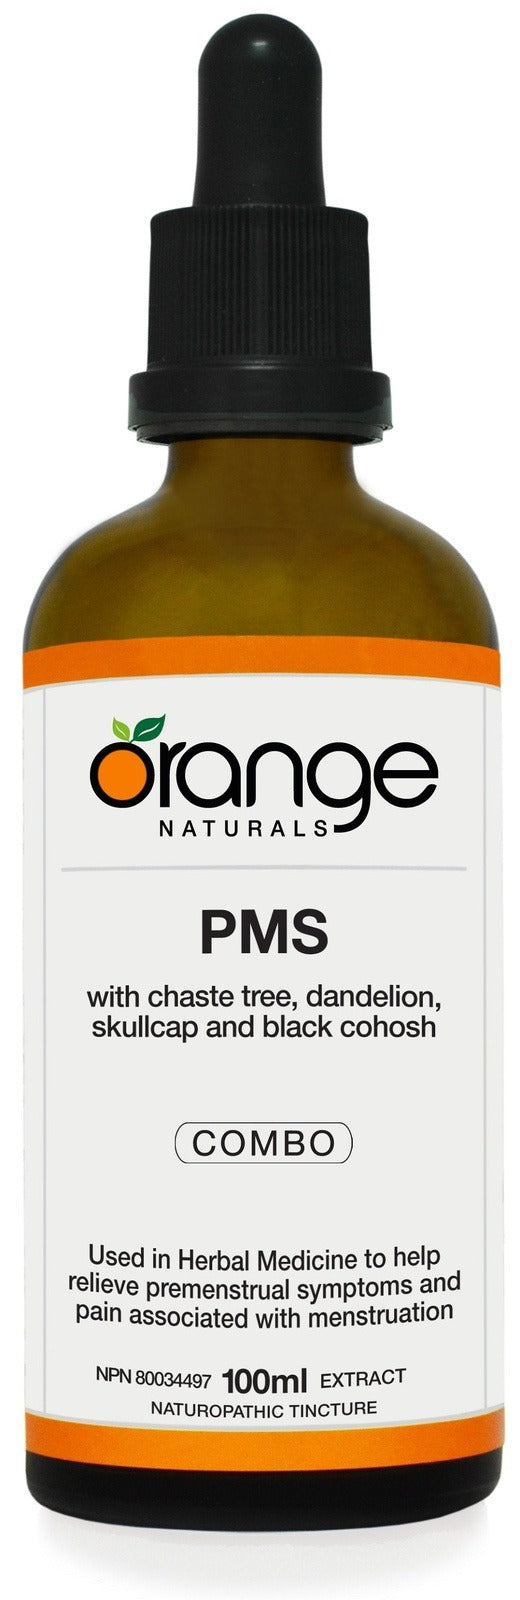 Orange Naturals PMS Combo Extract 100 mL Image 1